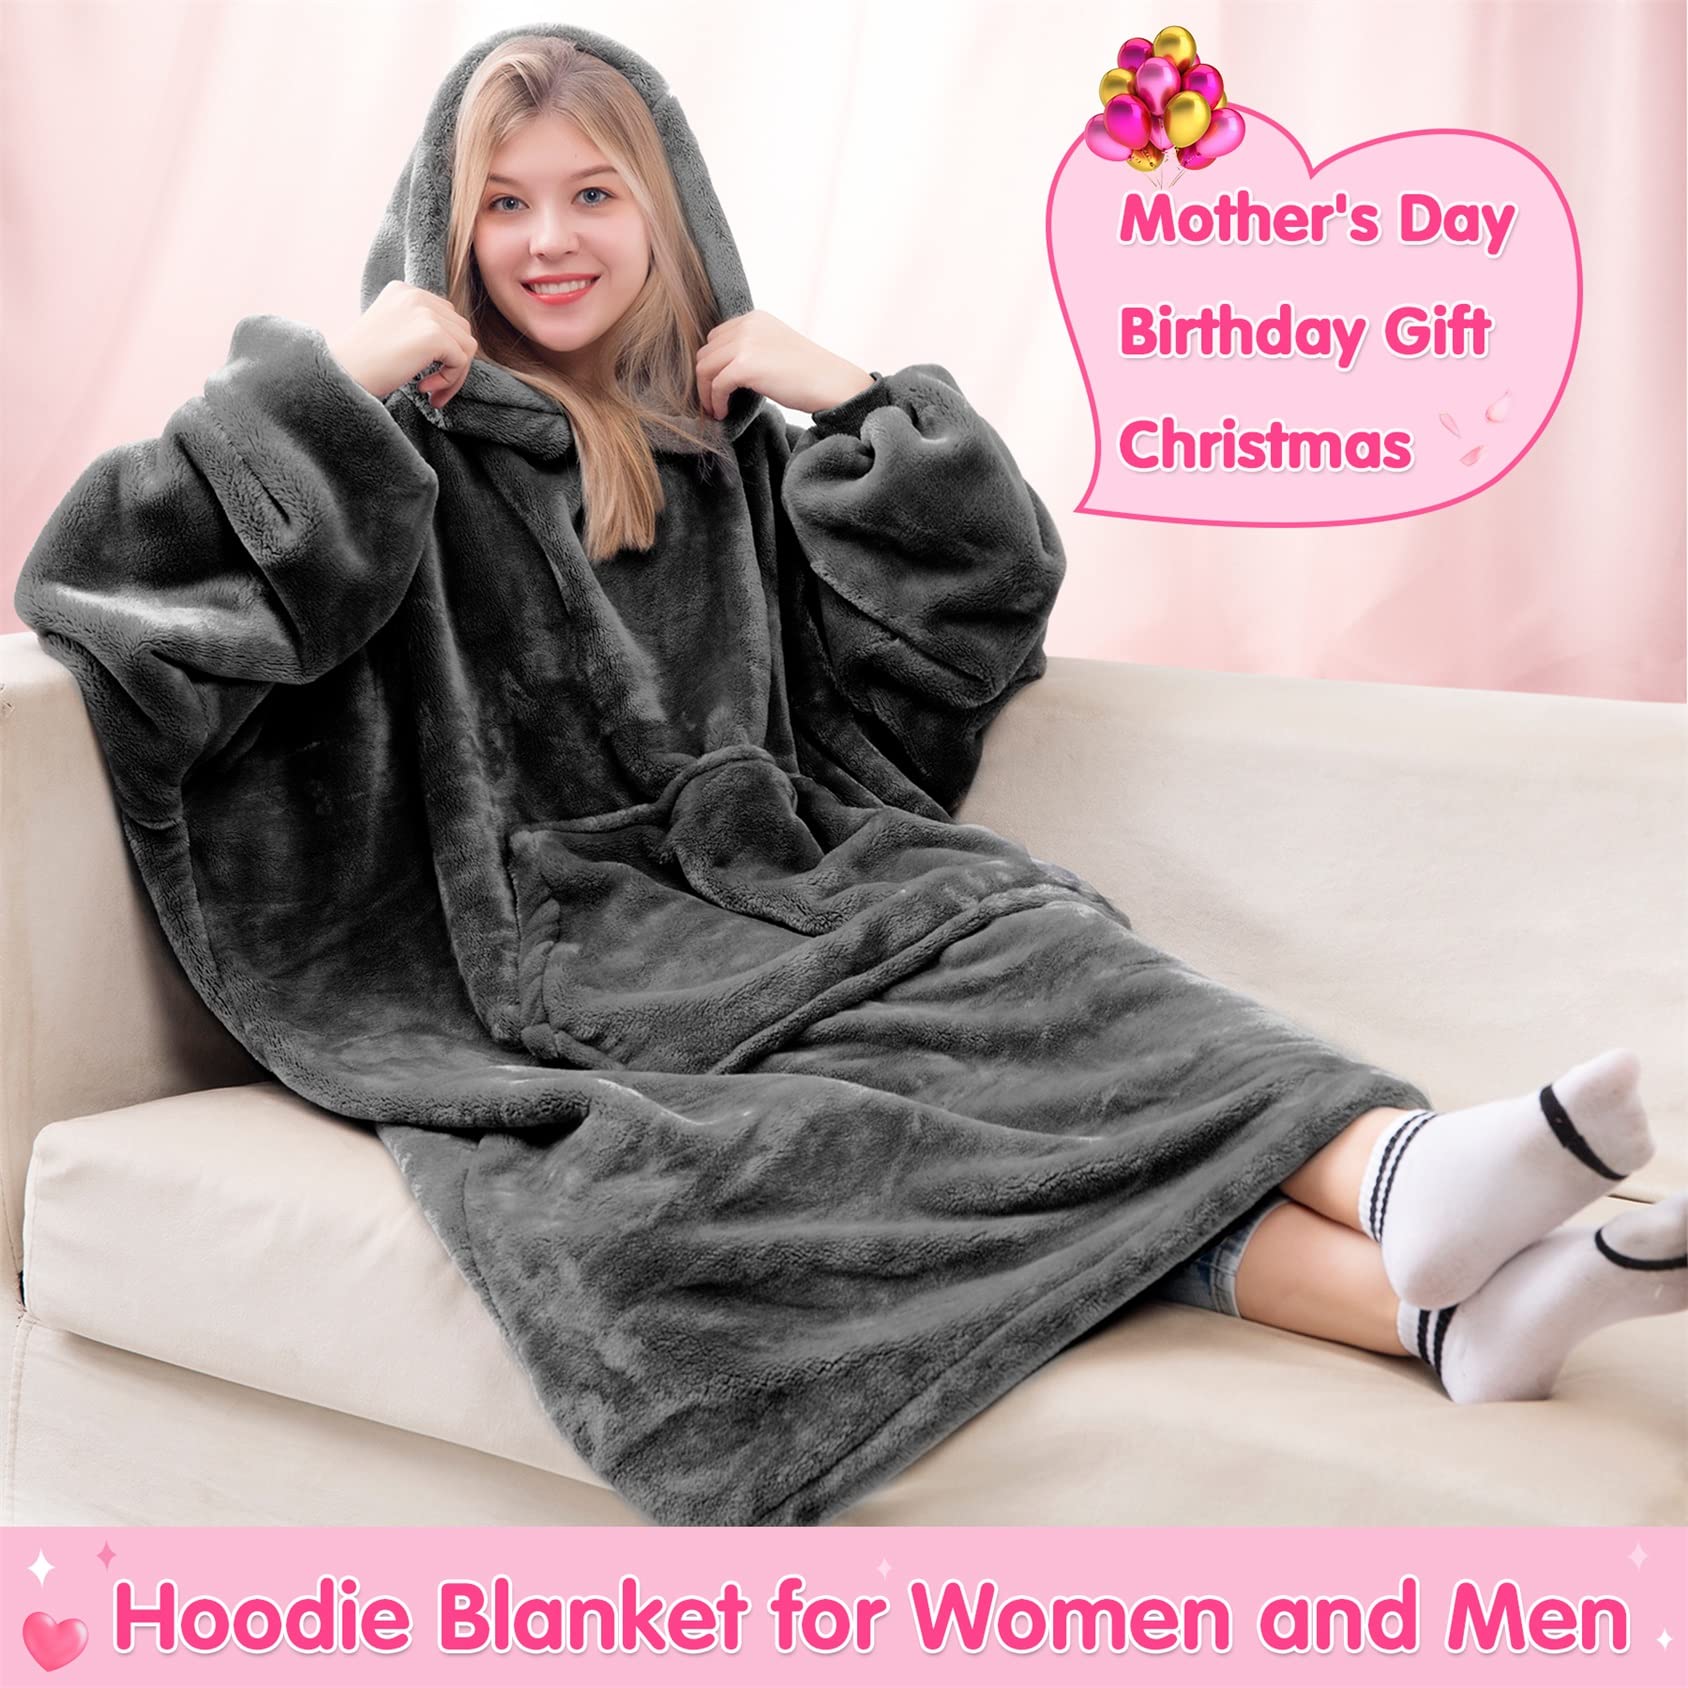 Fantaslook Wearable Blanket Hoodie Sweatshirt for Women and Men, Warm and Cozy Blanket Hoodie, Flannel Blanket with Sleeves and Giant Pocket - image 2 of 6